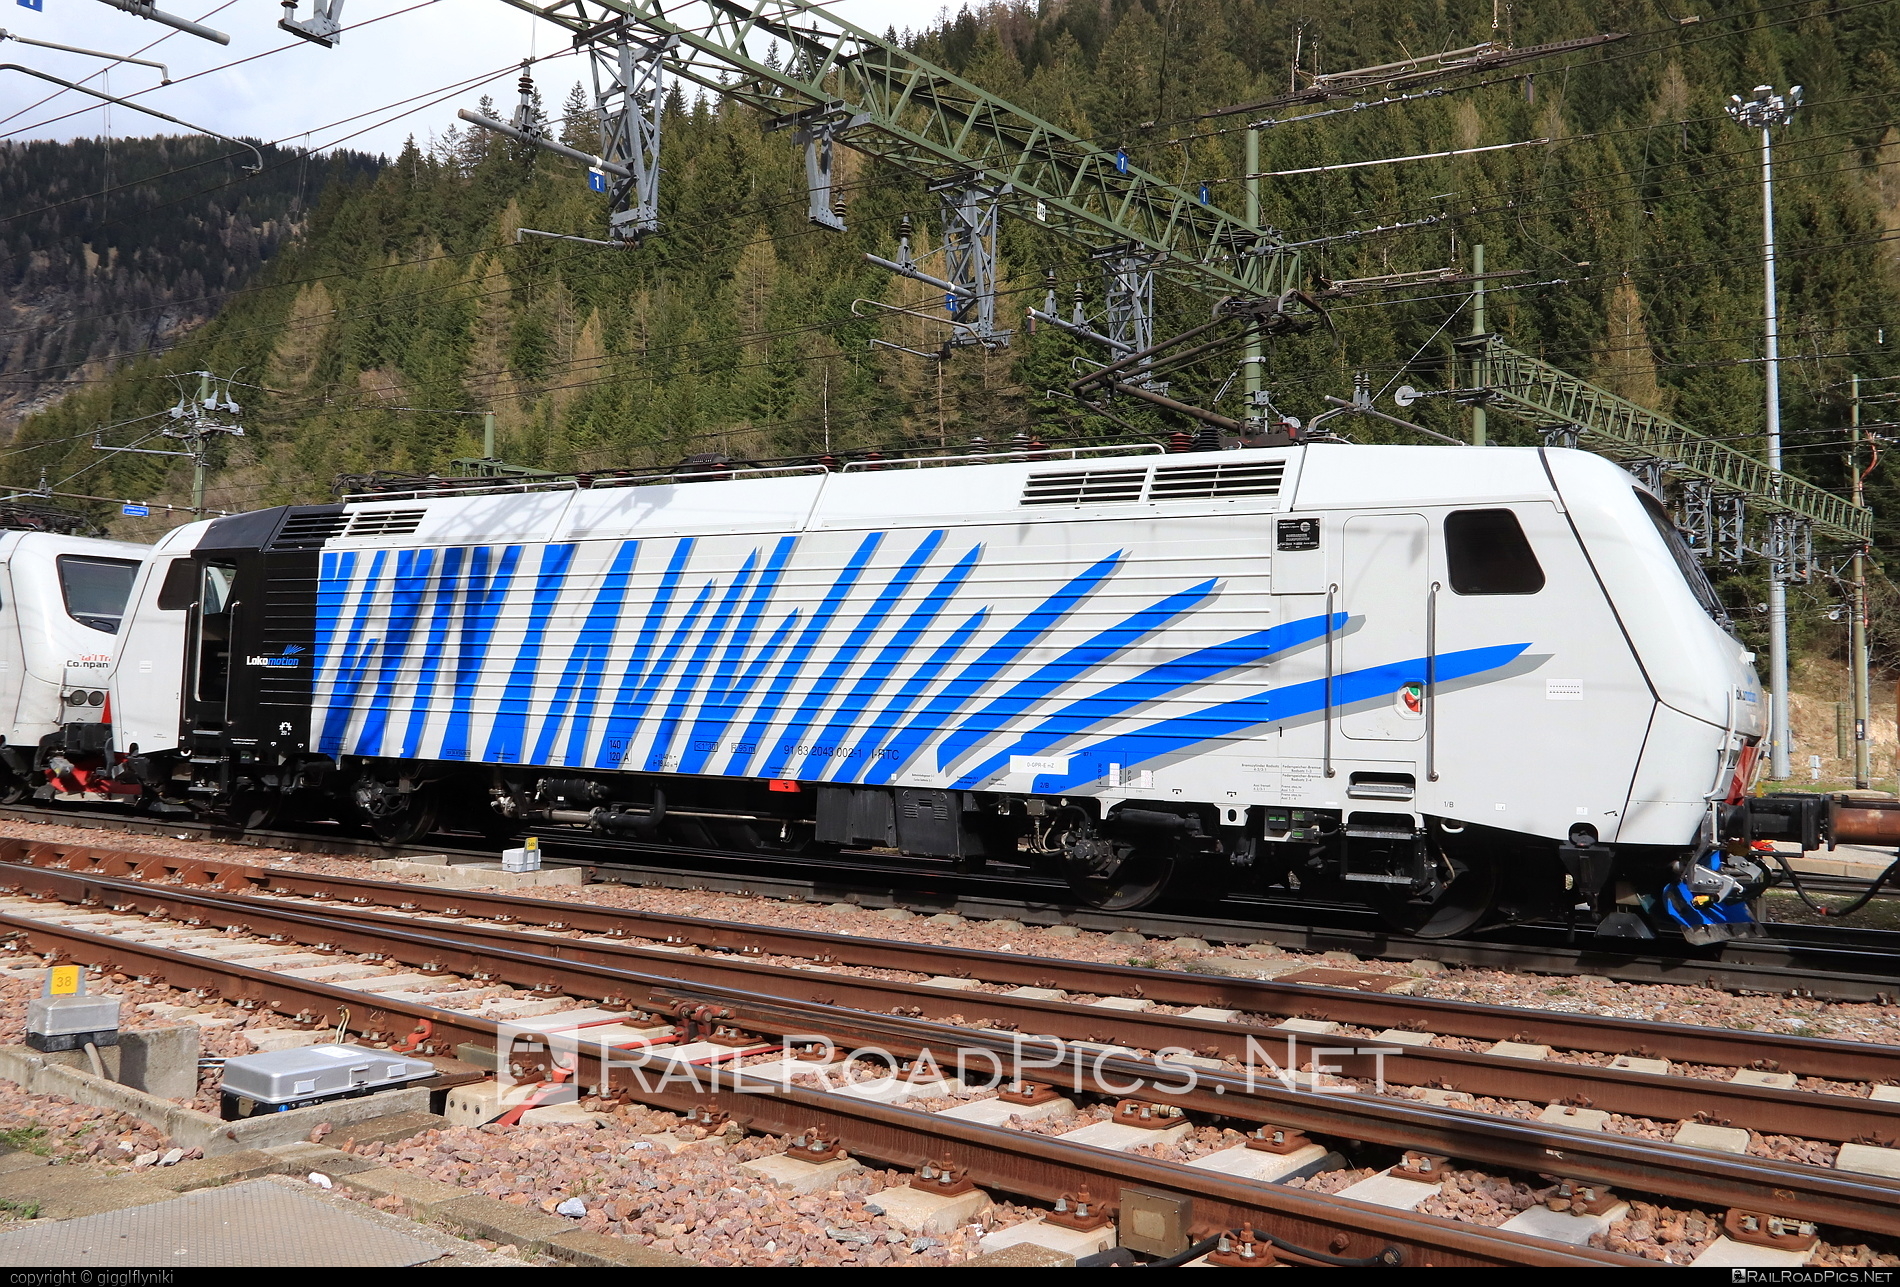 FS Class E.412 - EU43-002 operated by Lokomotion Gesellschaft für Schienentraktion mbH #LokomotionGesellschaftFurSchienentraktion #RailTractionCompany #e412 #fsClassE412 #lokomotion #rtc